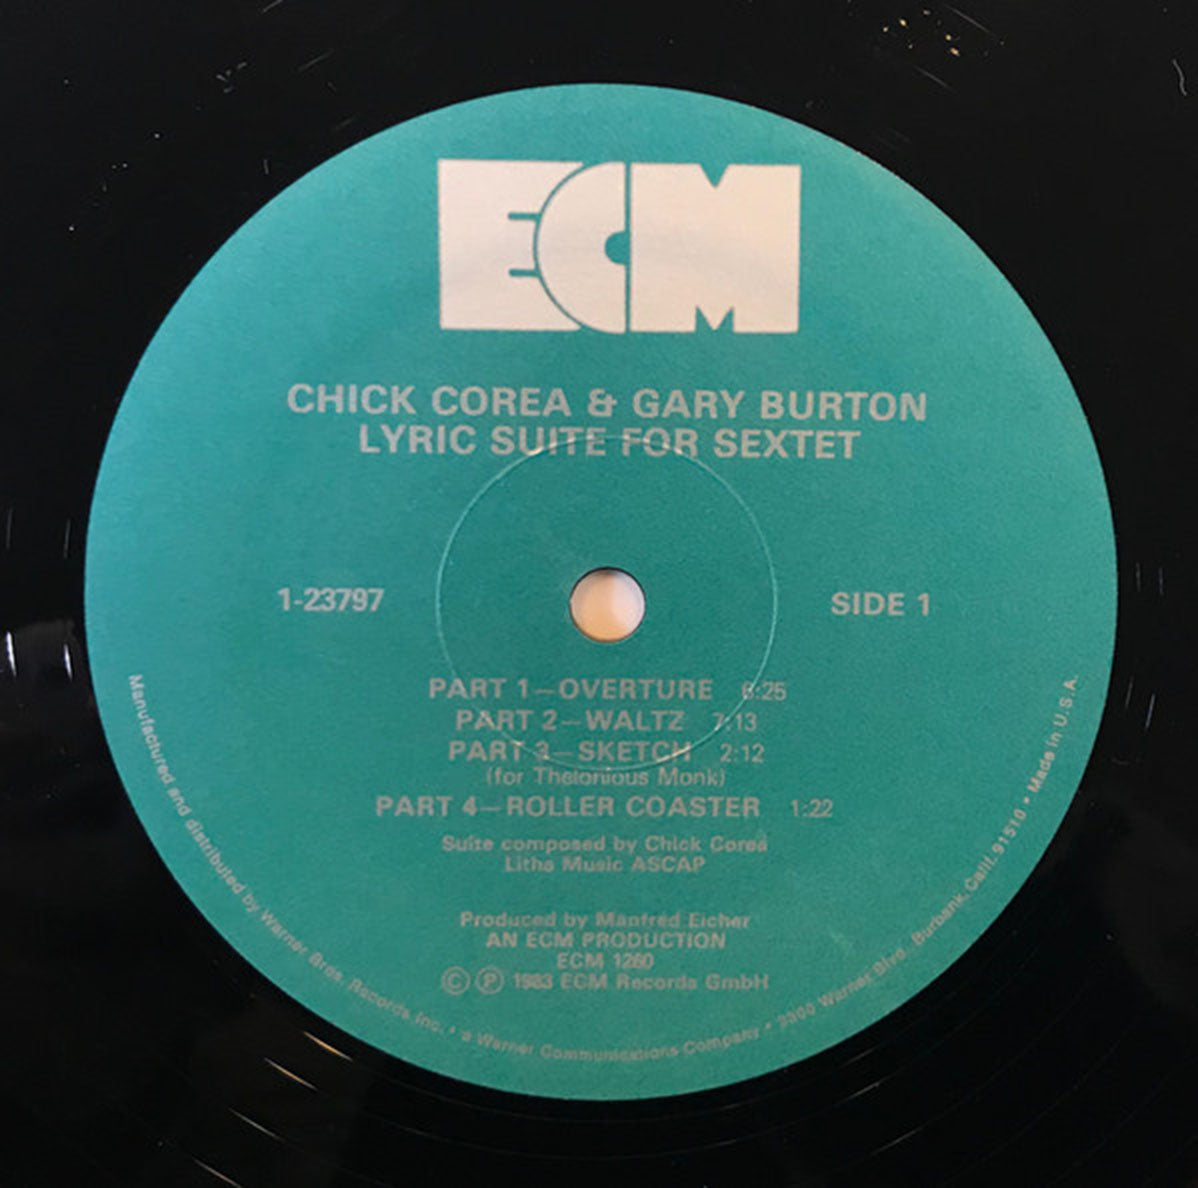 Chick Corea / Gary Burton – Lyric Suite For Sextet - US Pressing